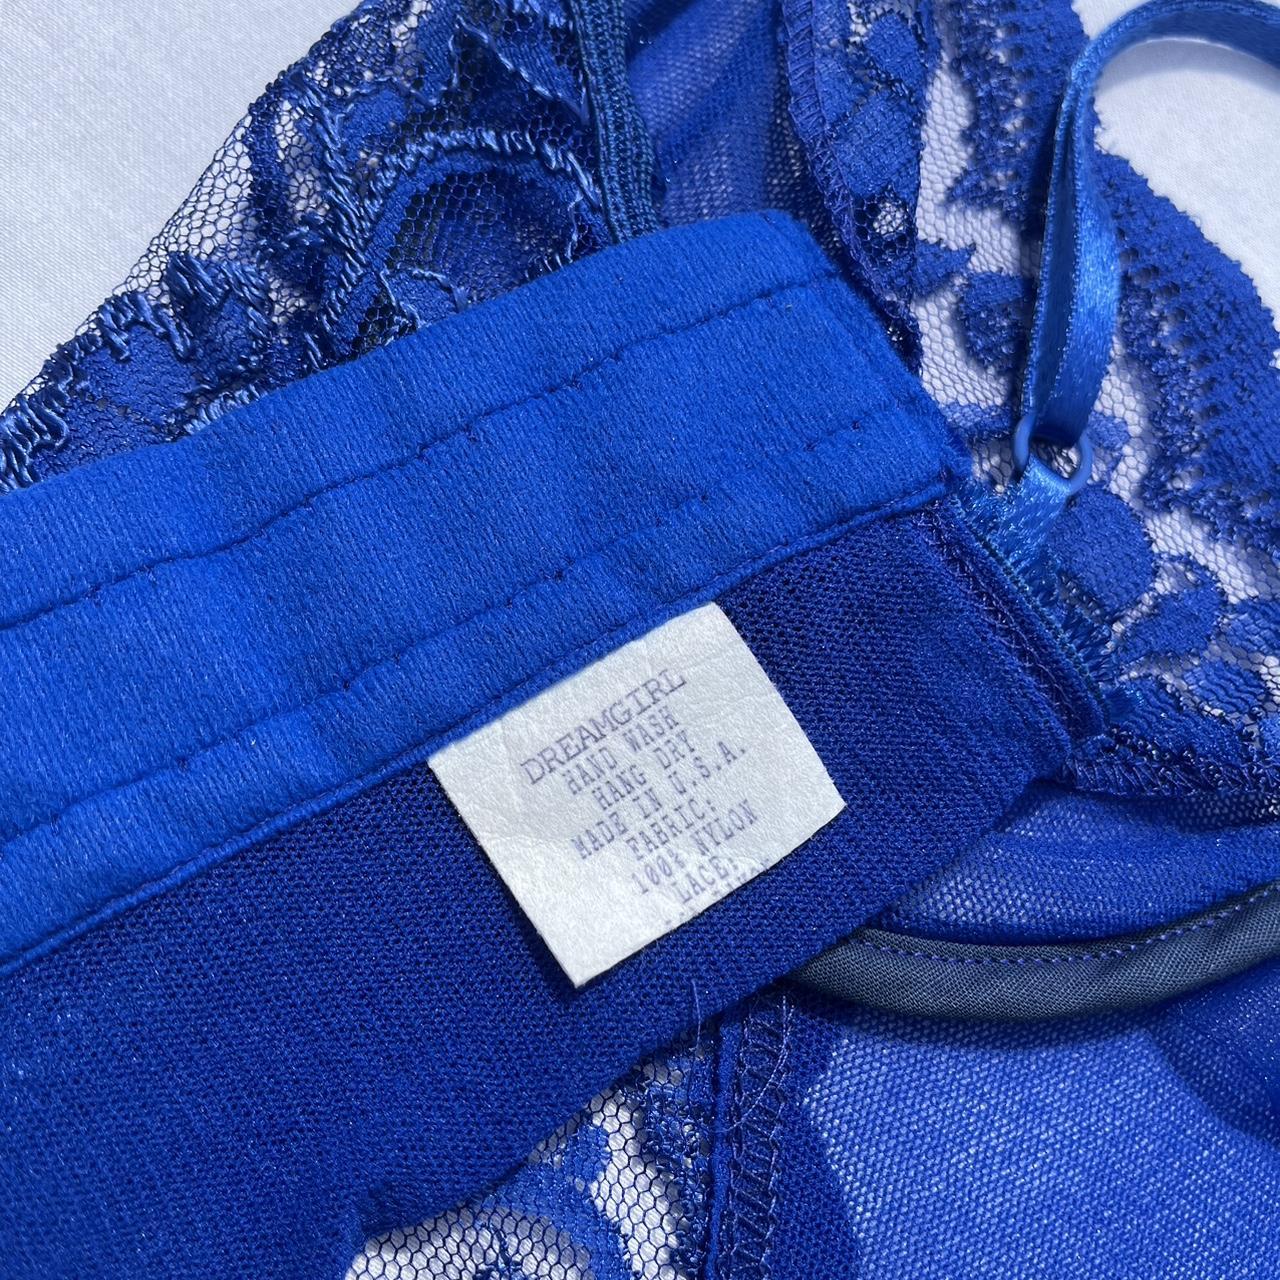 Vintage royal blue Dreamgirl corset:) -USA made,... - Depop